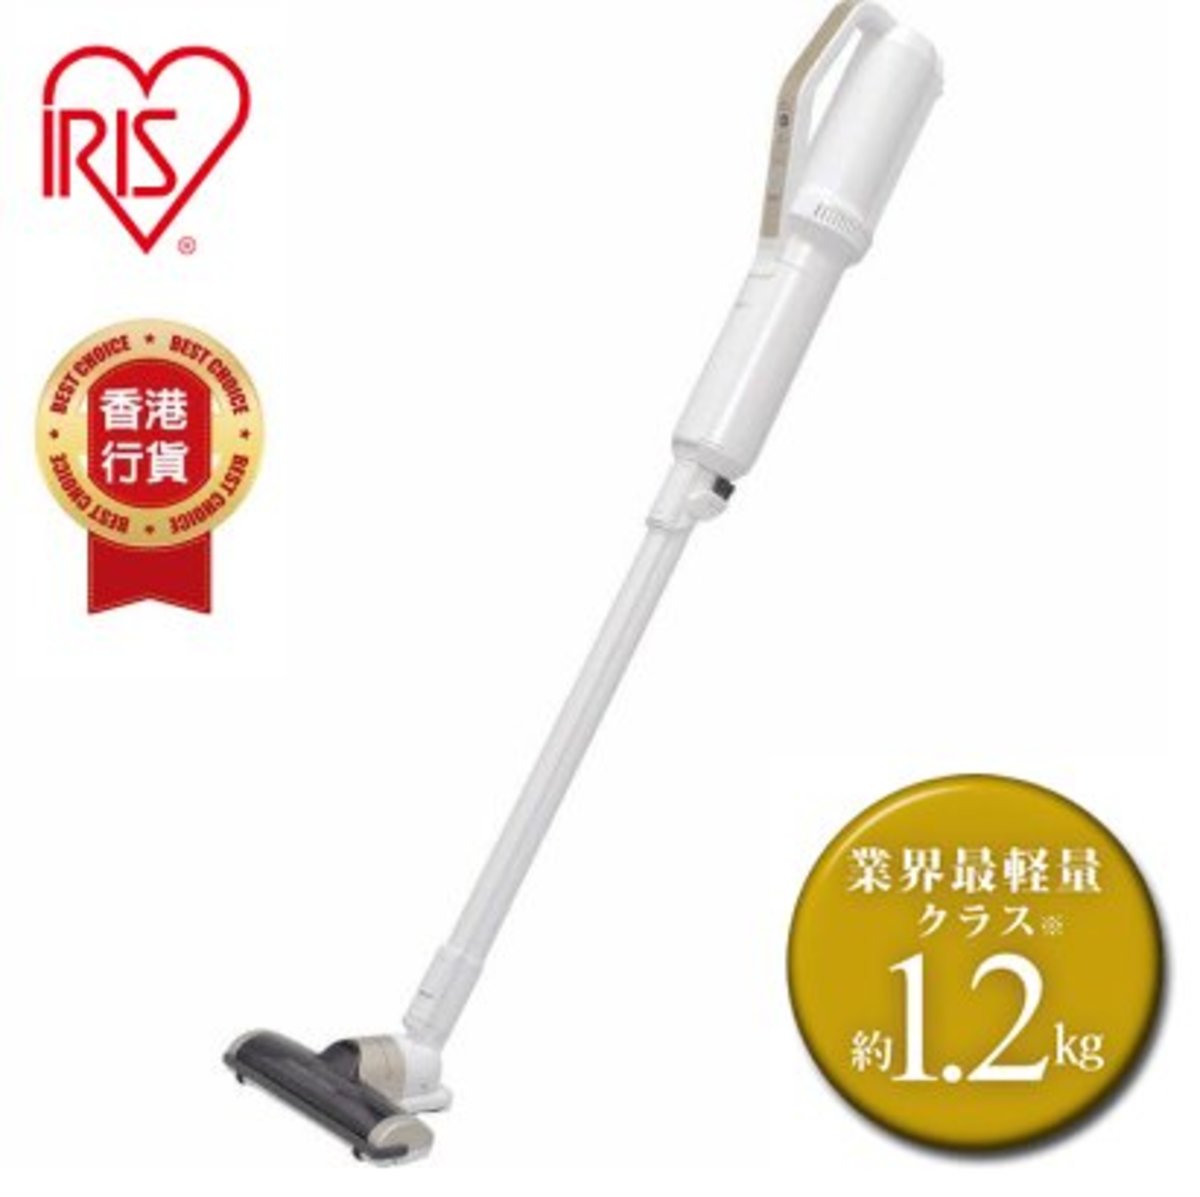 IRIS - IC-SLDC4 Ultra-Slim and Lightweight Dual-Purpose Vacuum Cleaner - White [Licensed in Hong Kong]